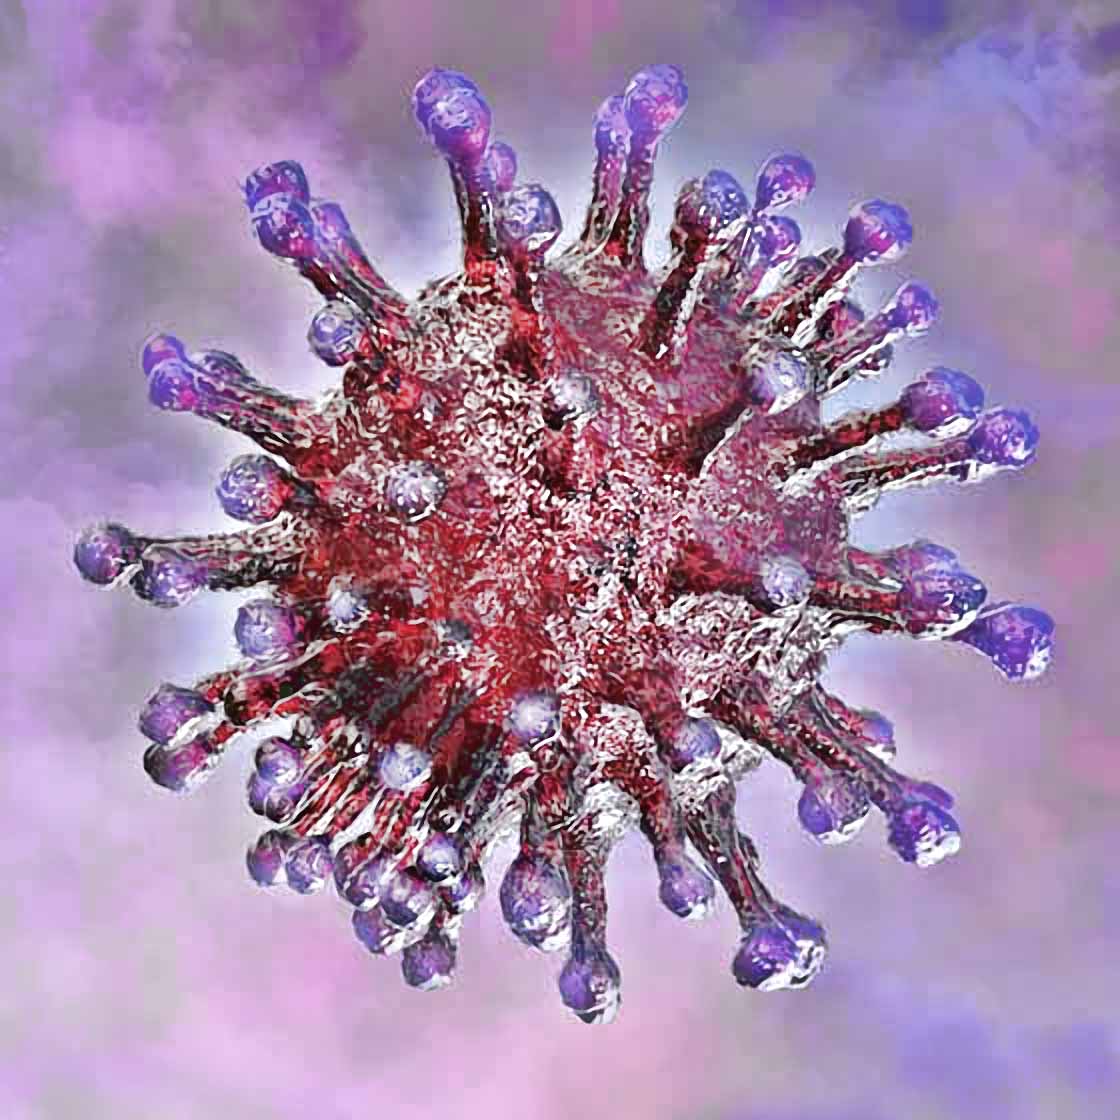 Corona-Virus-Hygiene-Ansteckung-Kampfstoff-Biowaffe-Krieg-Lock-Down